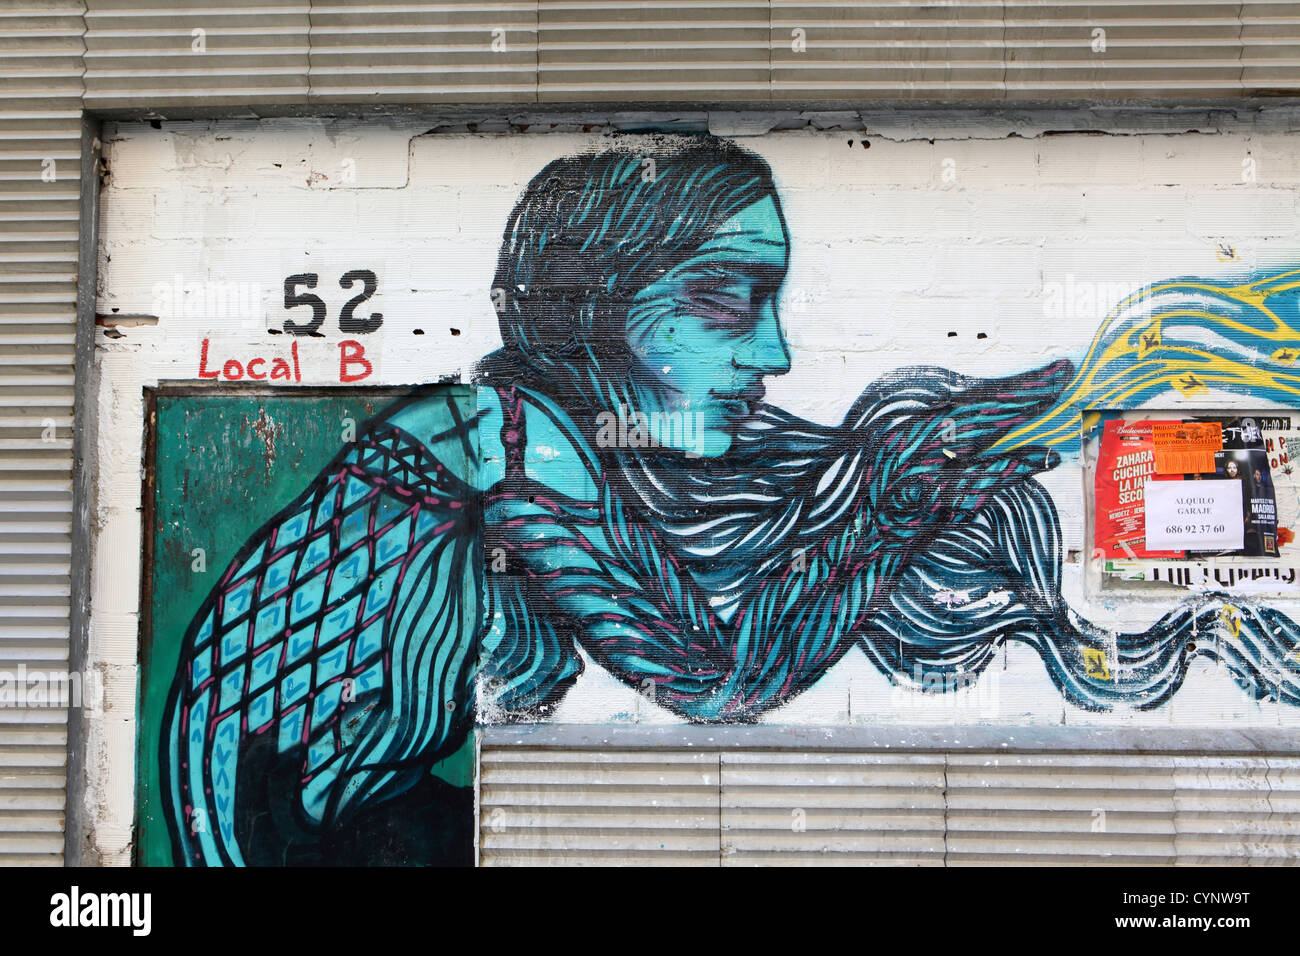 Street art, graffiti, wall painting of woman with long hair, self-expression, Madrid, Spain, Espana Stock Photo